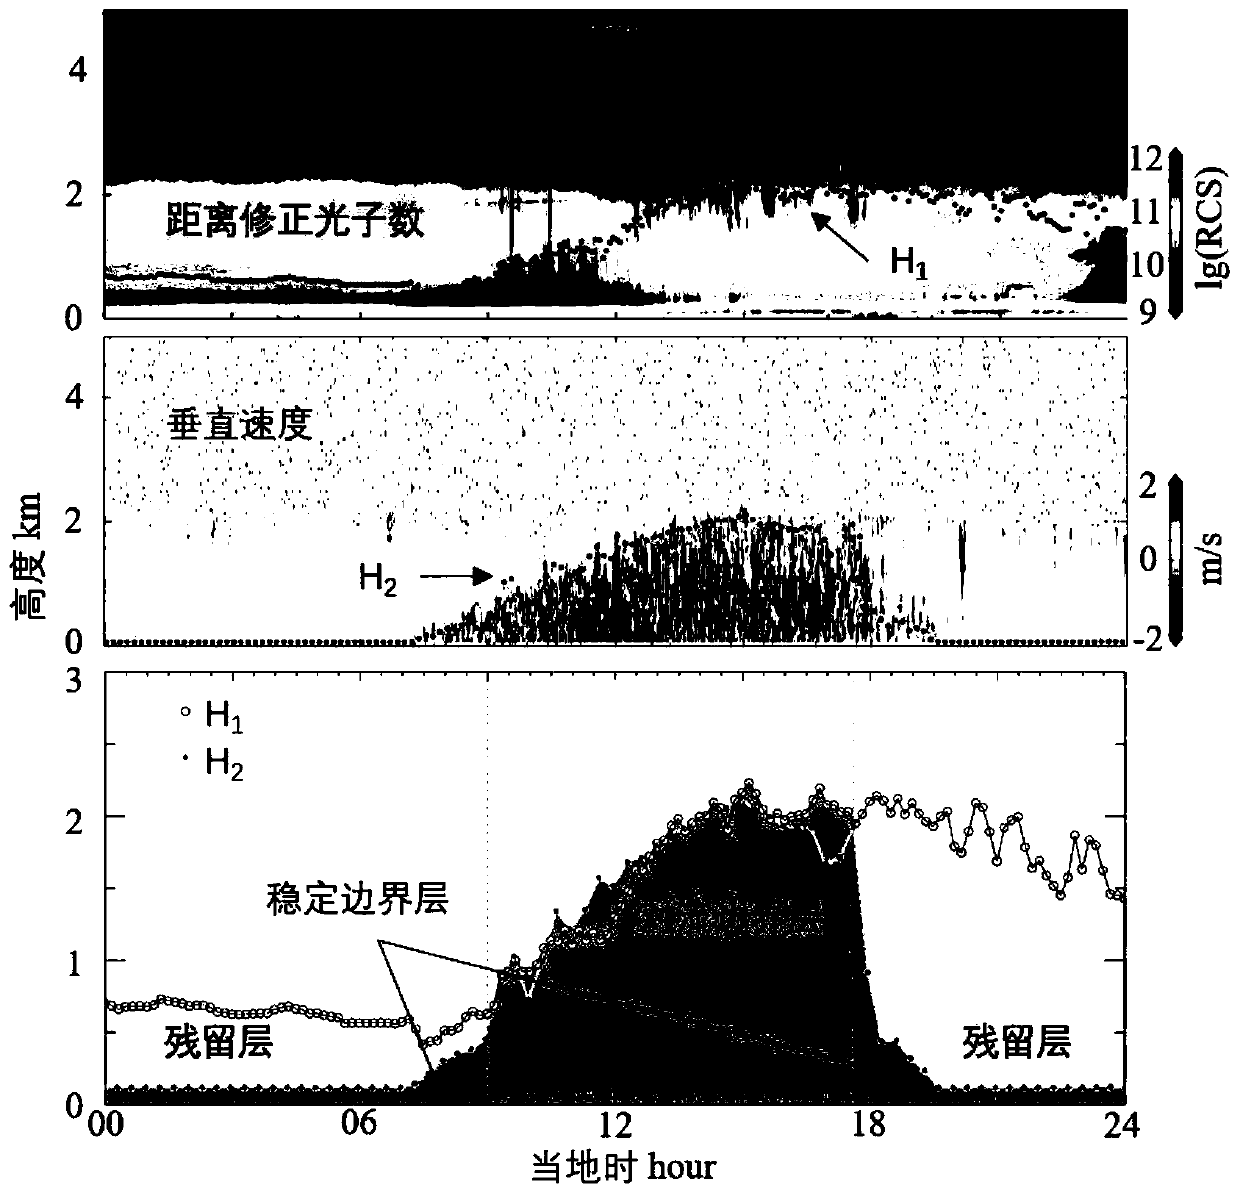 Atmospheric boundary layer detection method based on hybrid laser radar